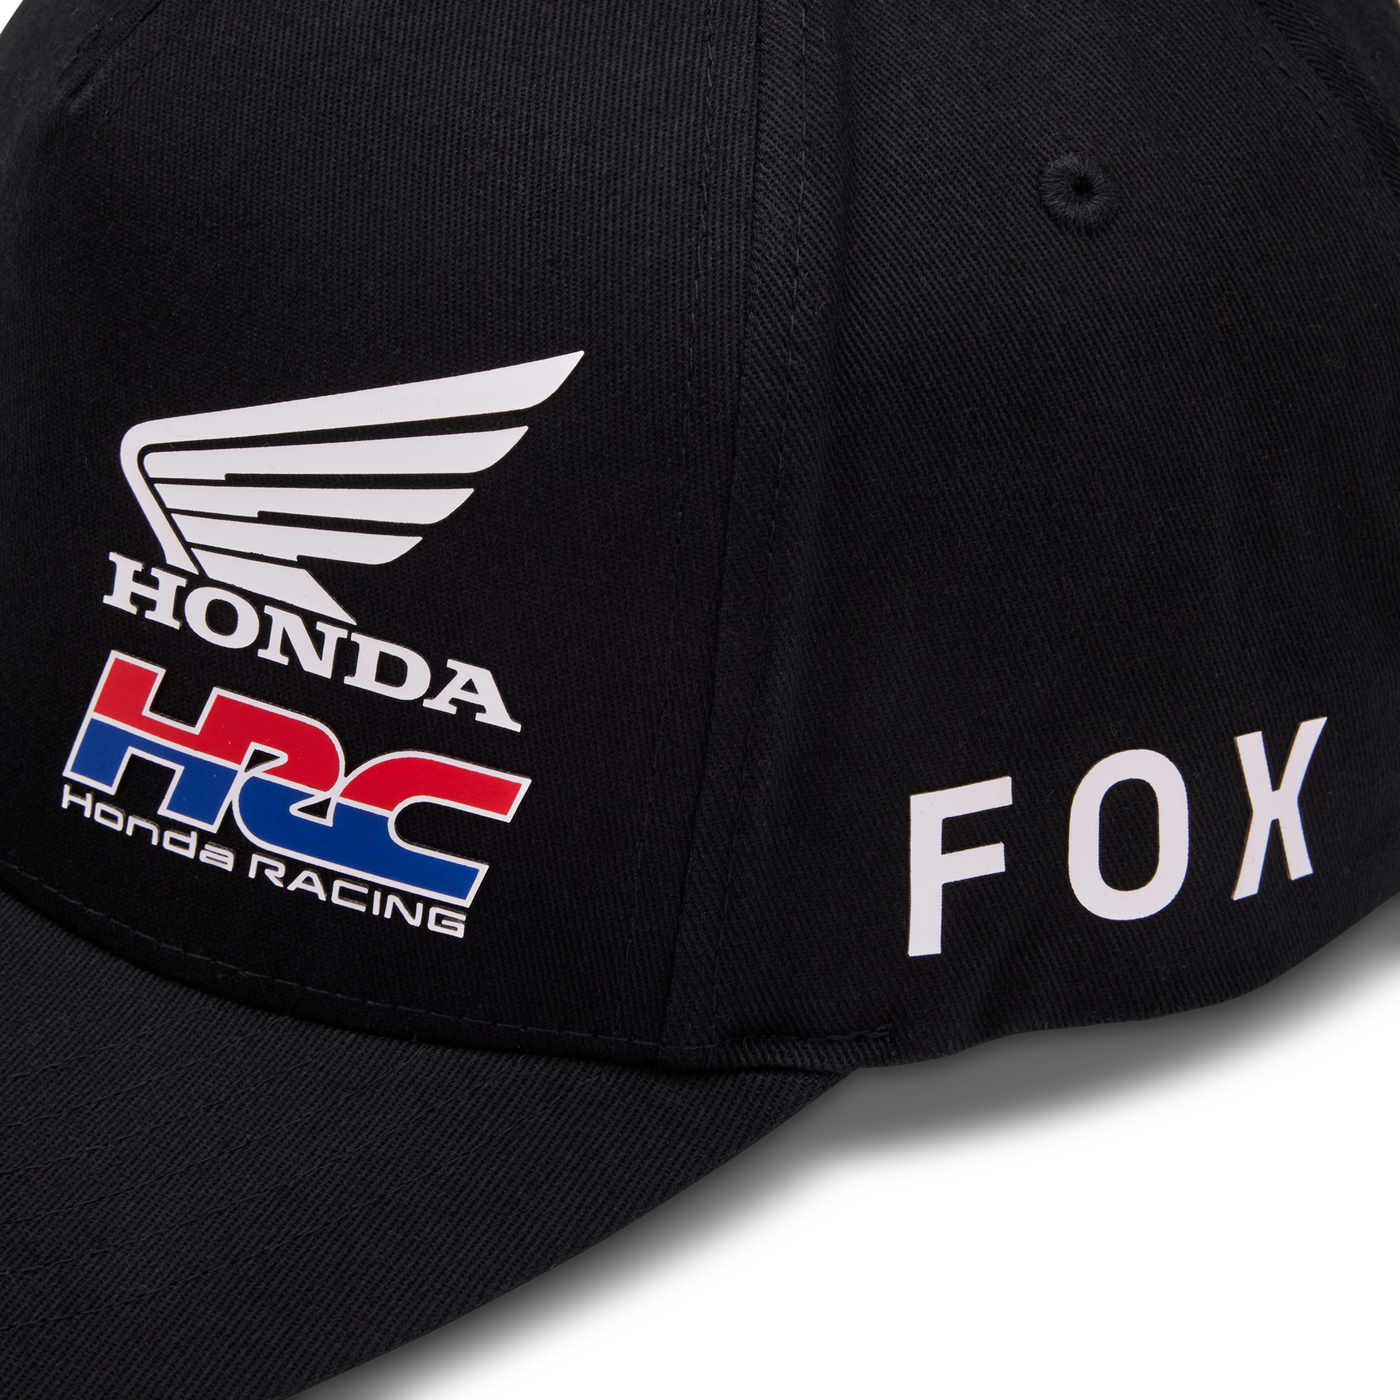 Fox Racing Fox x Honda Flexfit Hat - Black